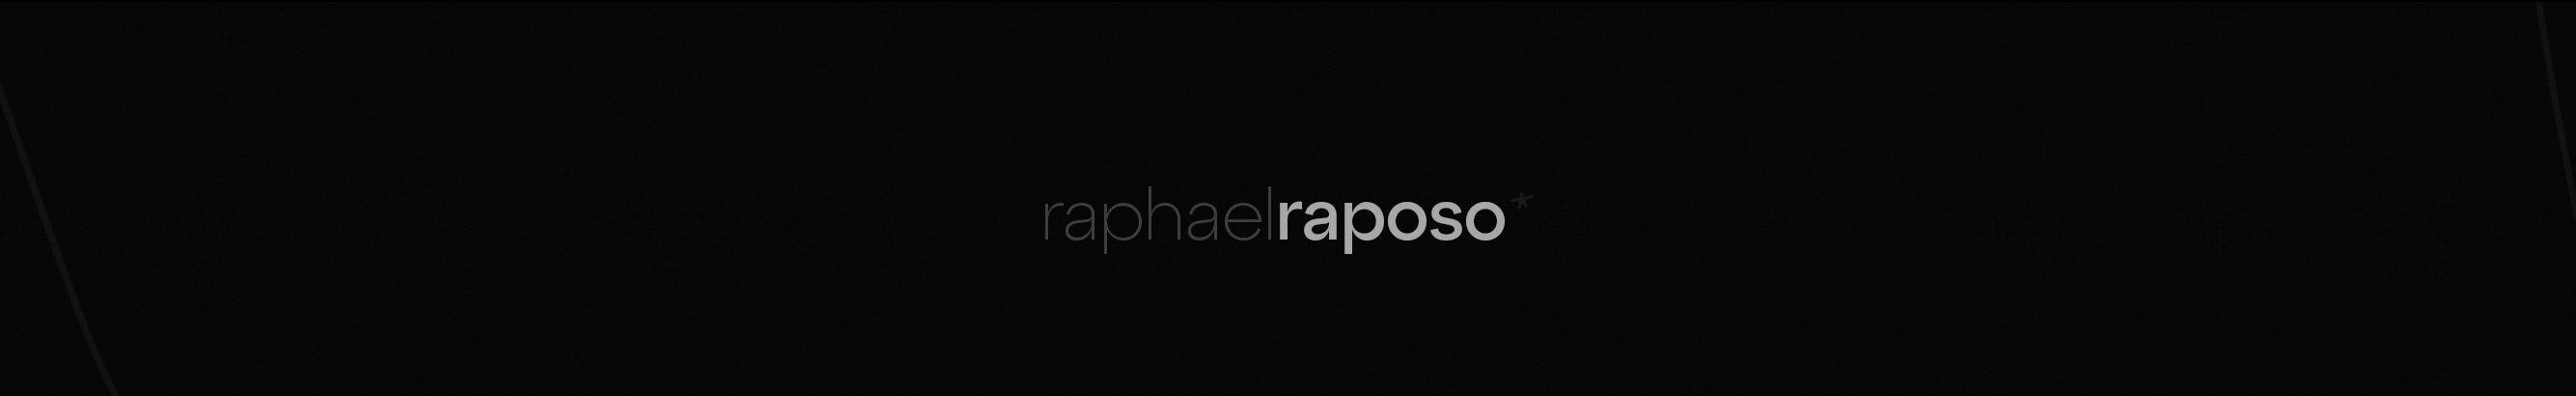 Raphael Raposo's profile banner